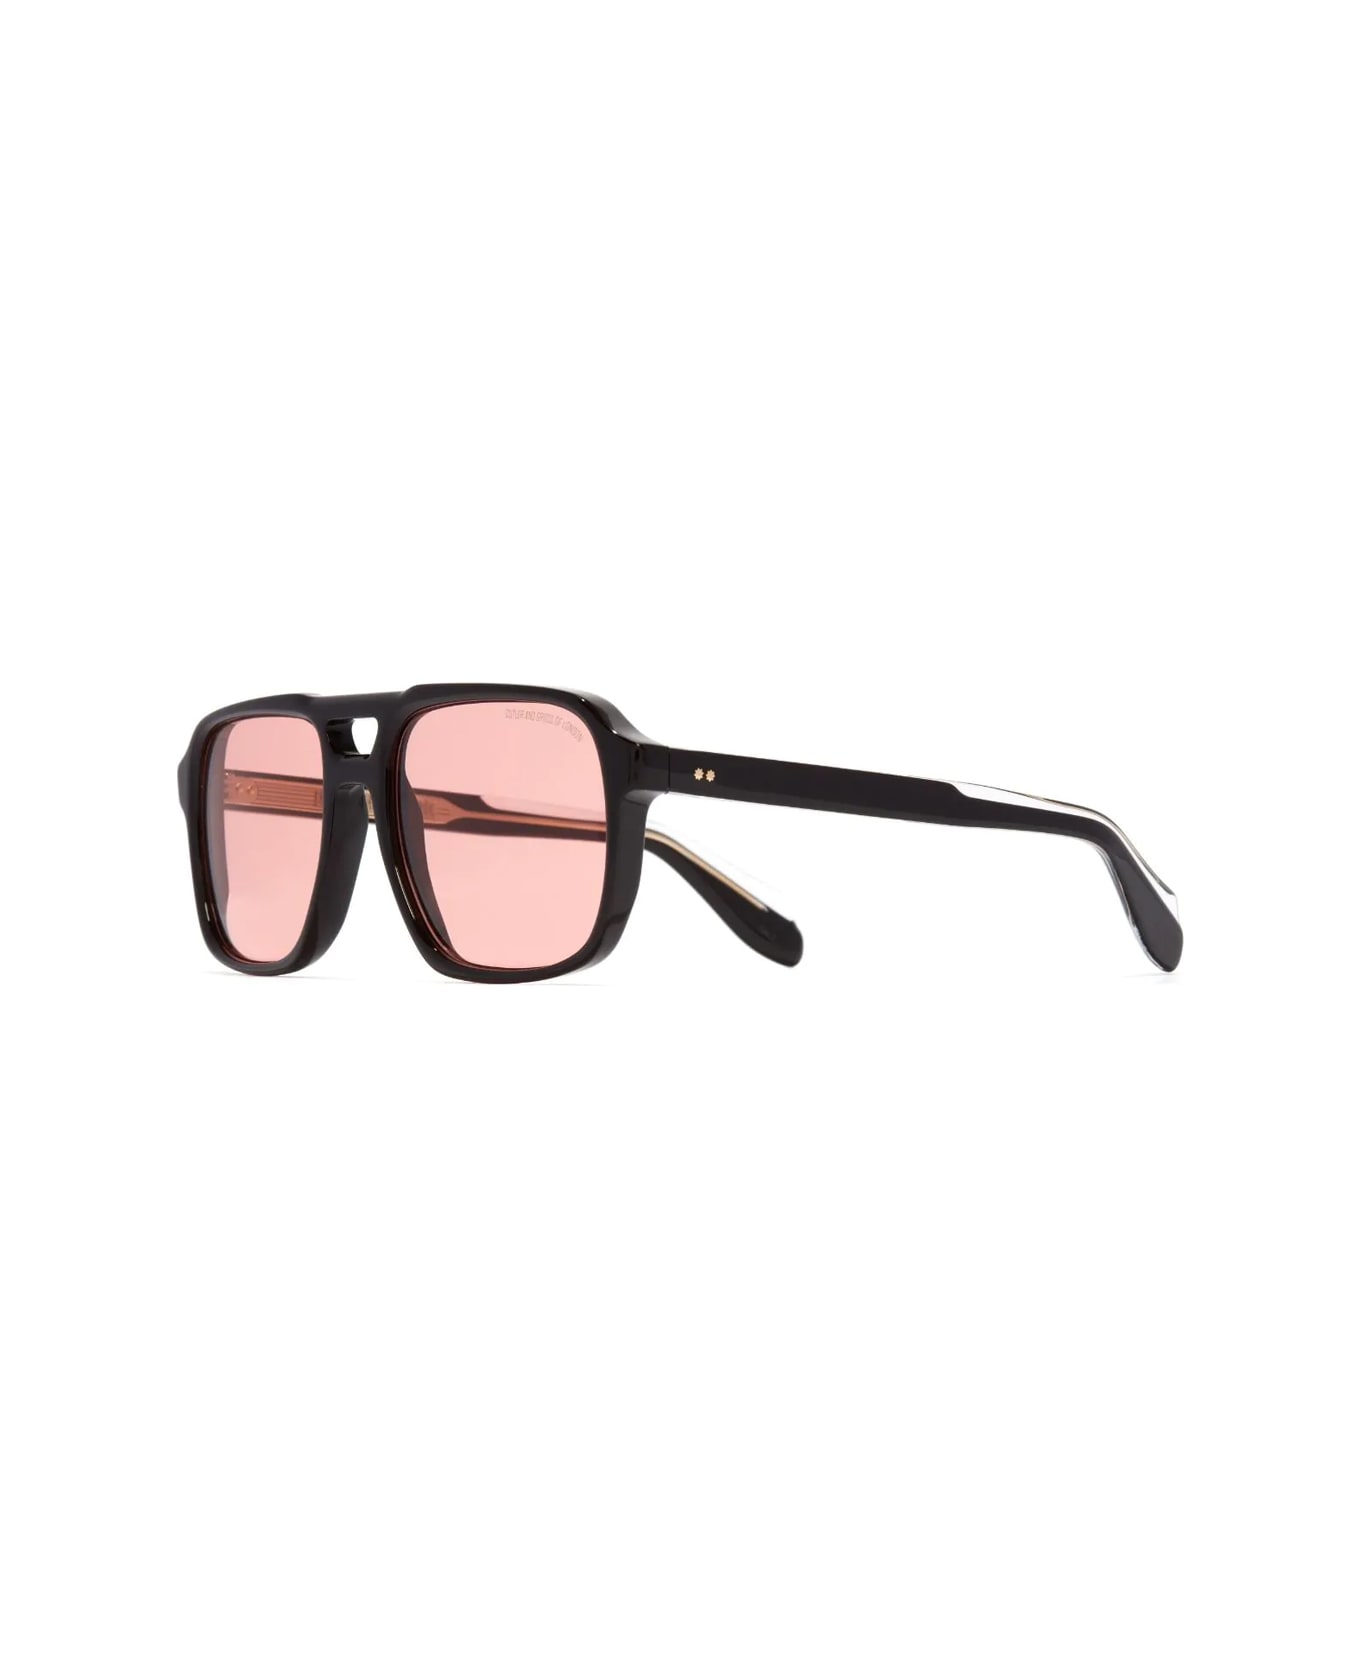 Cutler and Gross 1394 06 Sunglasses - Nero